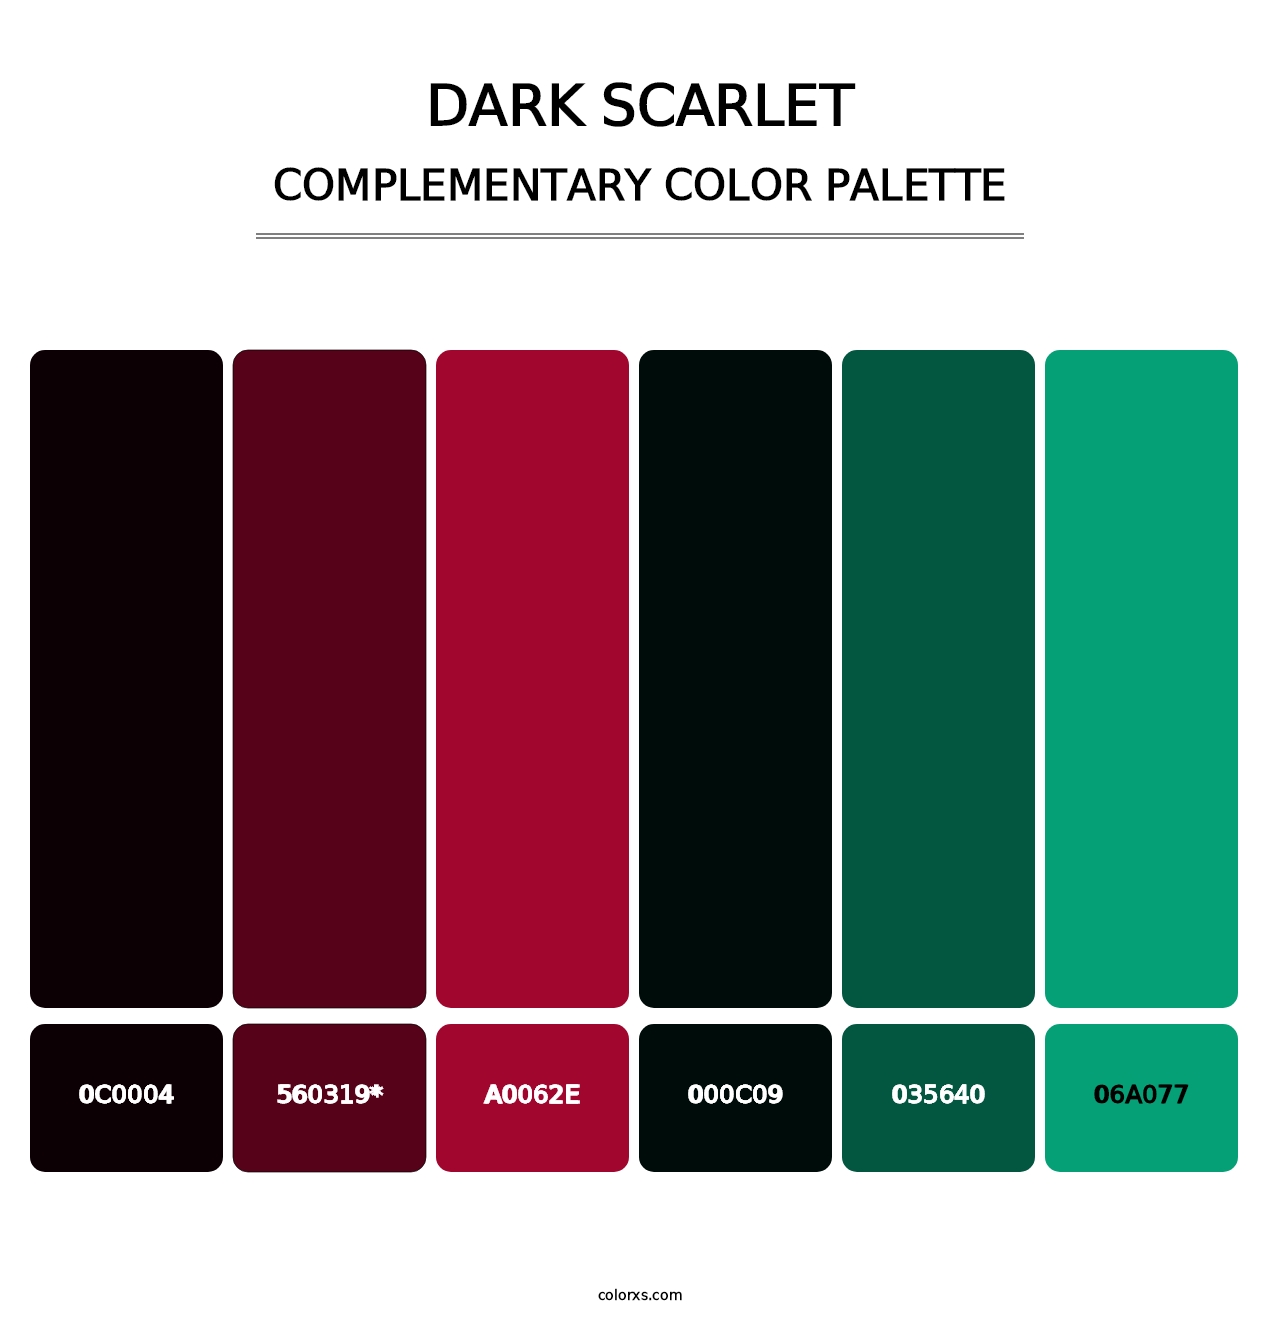 Dark Scarlet - Complementary Color Palette